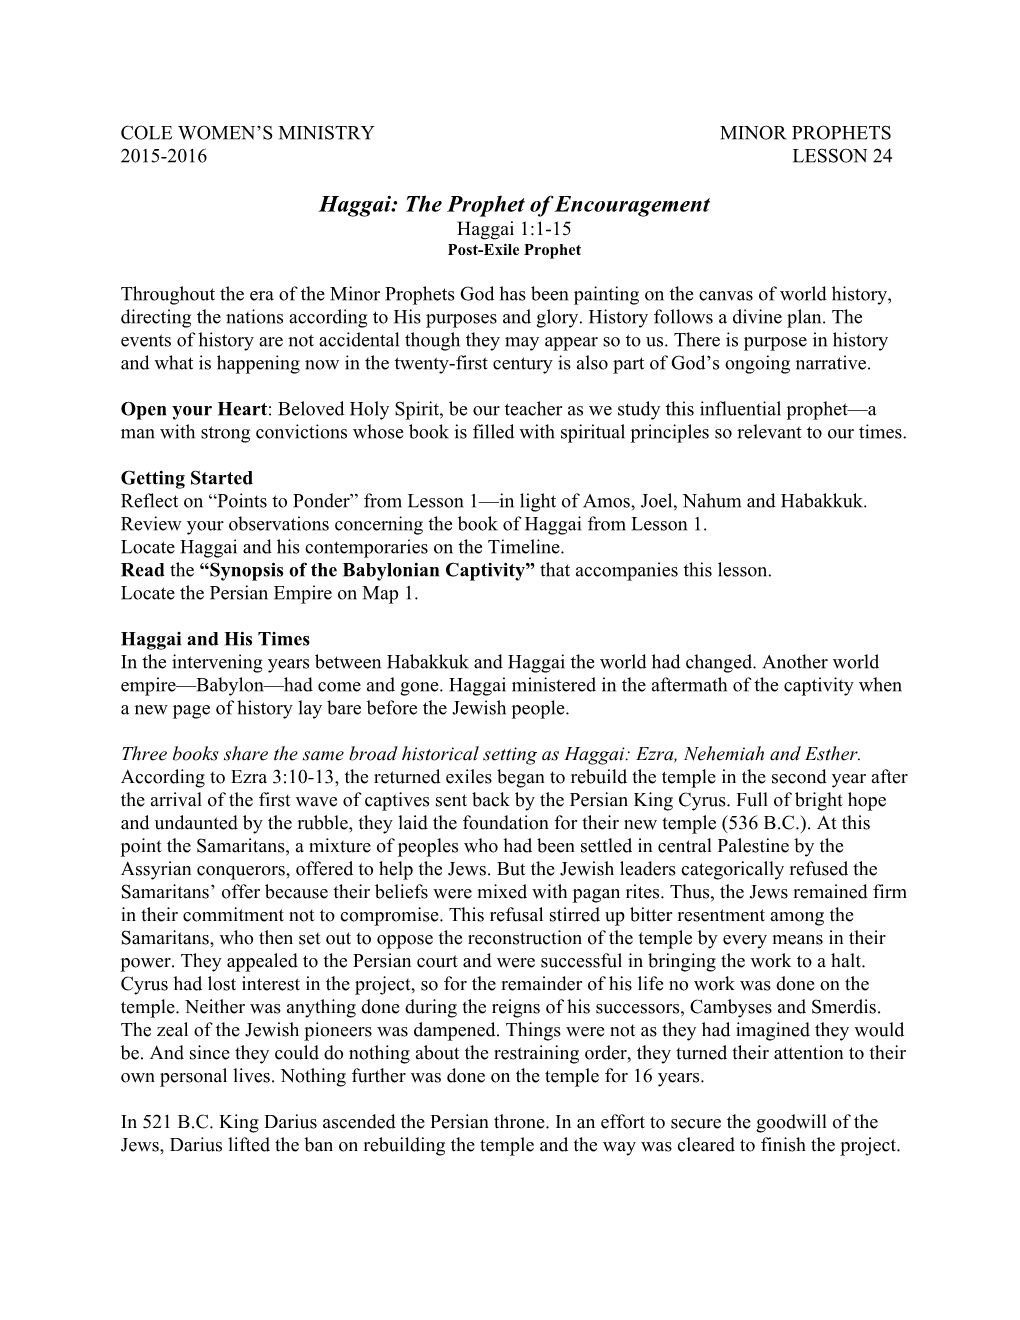 Haggai: the Prophet of Encouragement Haggai 1:1-15 Post-Exile Prophet